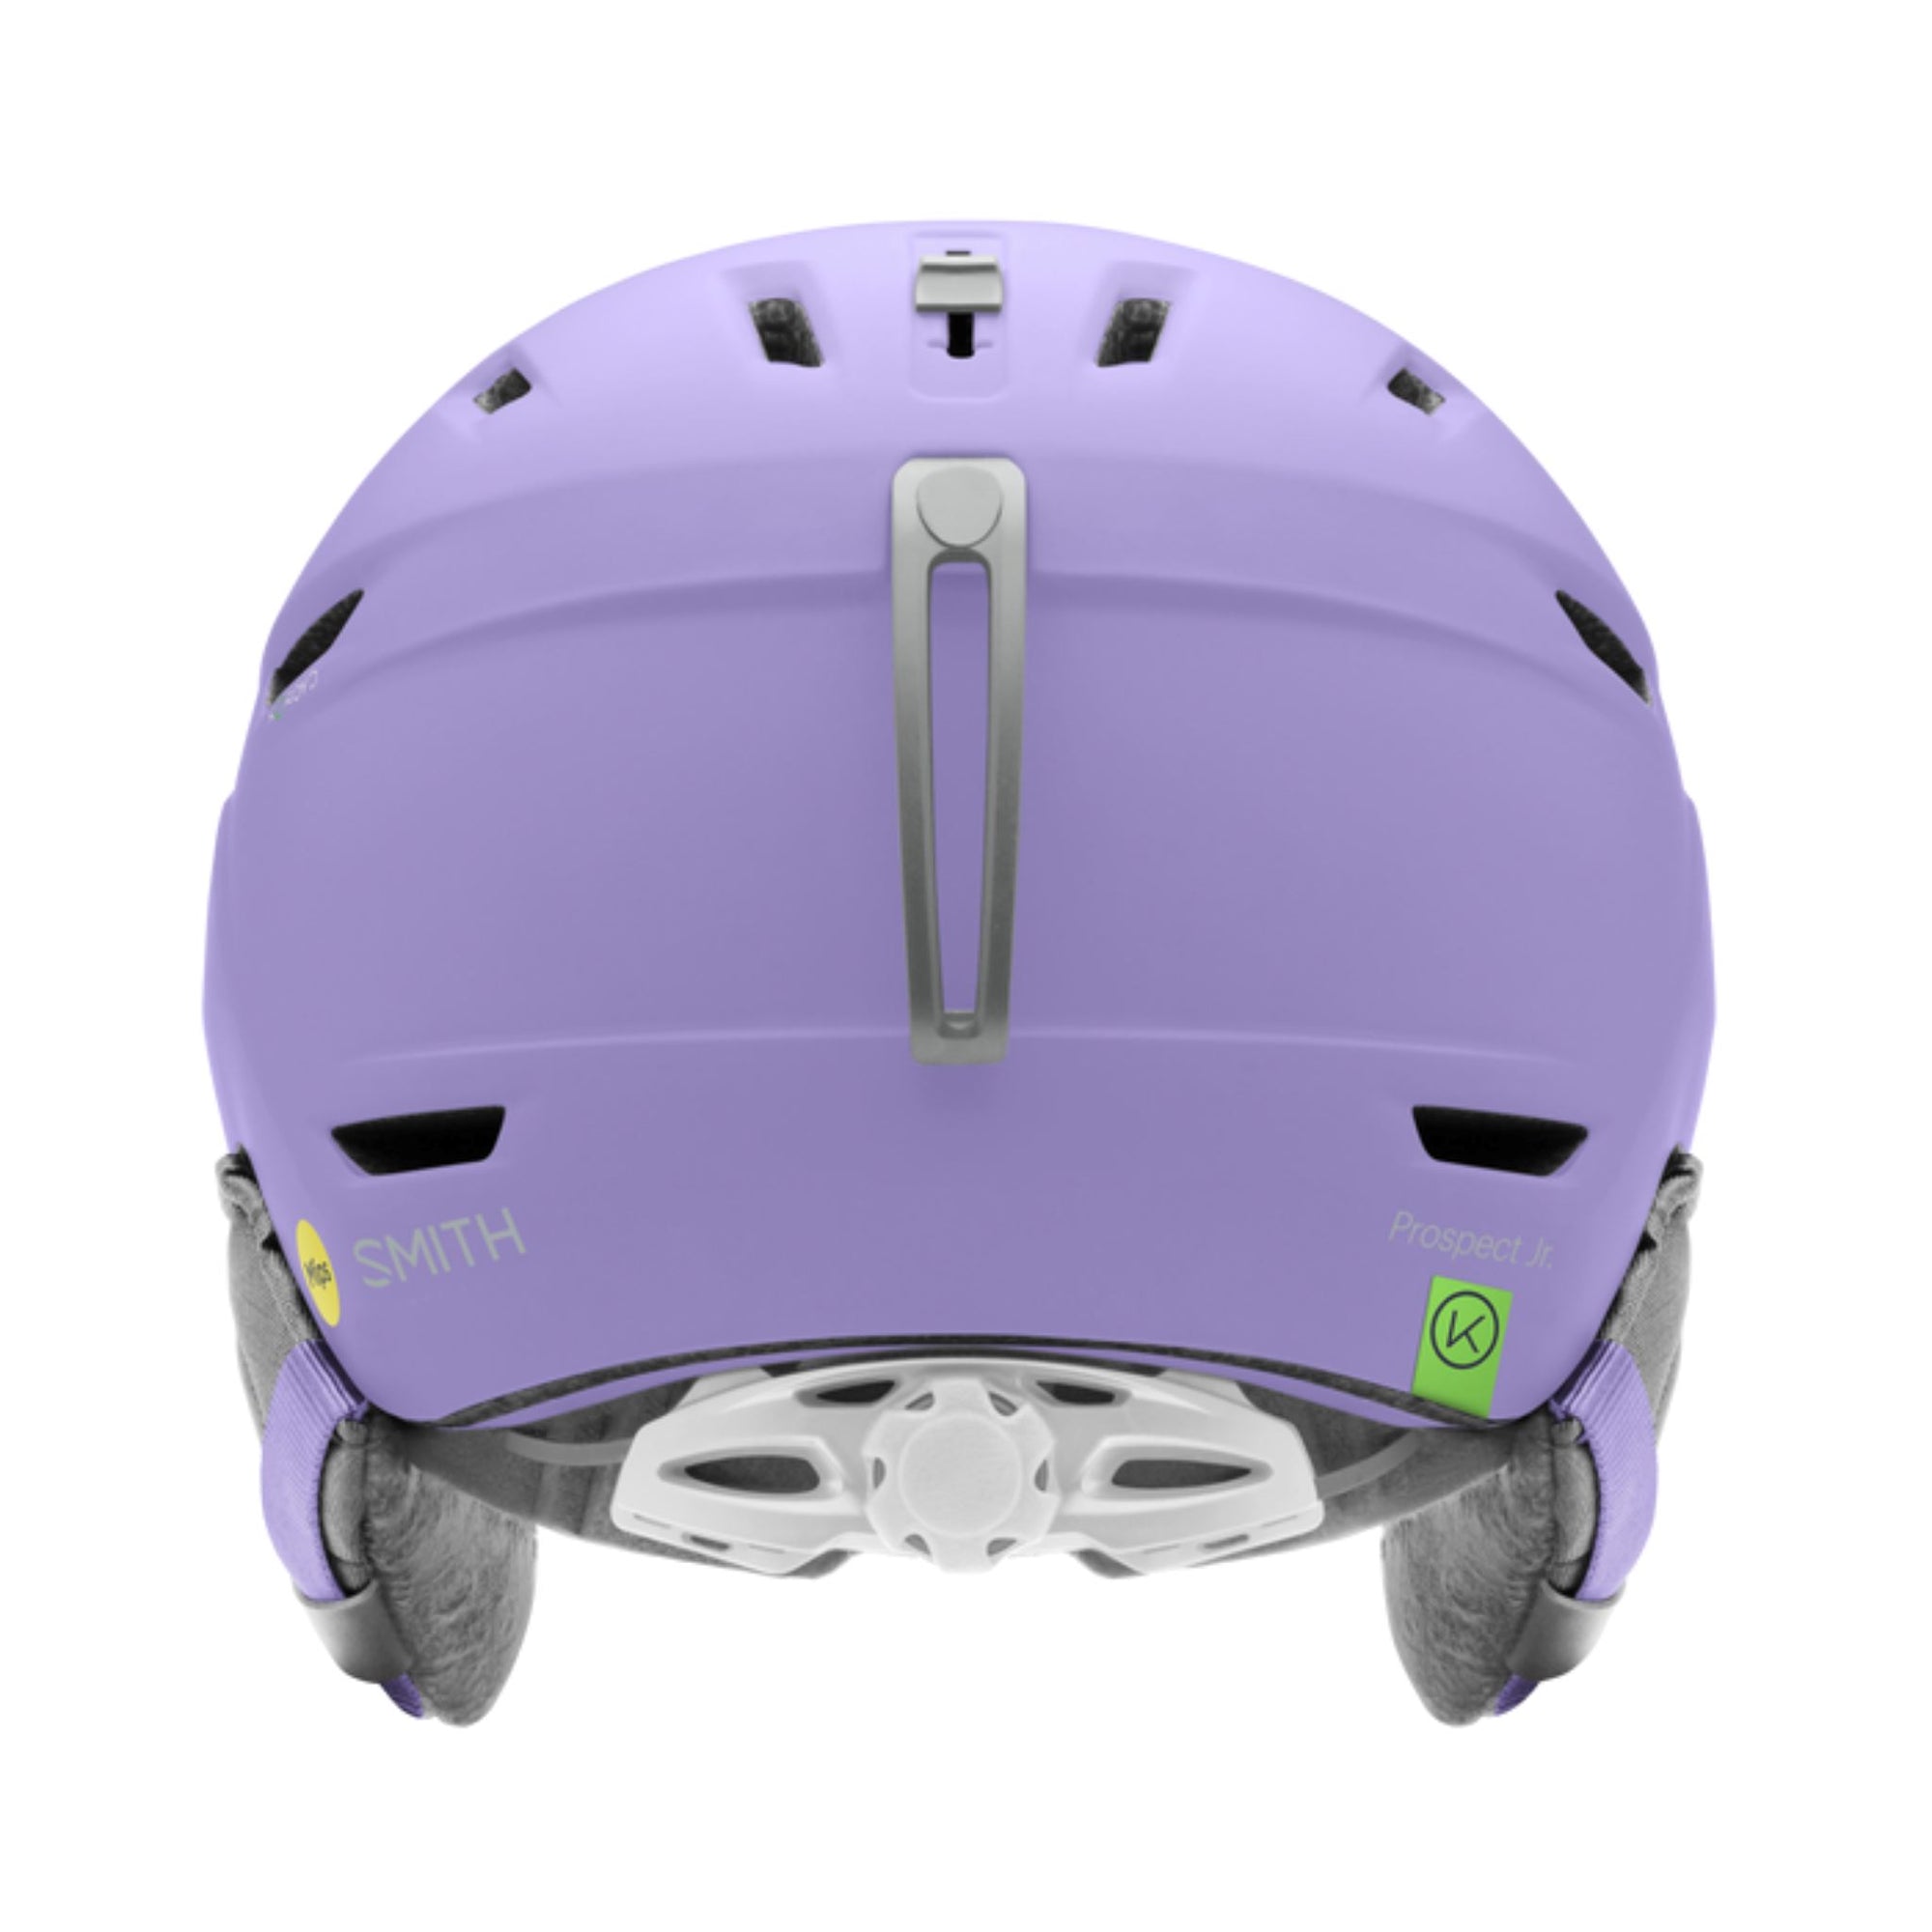 Kids Smith Prospect Jr. MIPS Helmet - Matte Peri Dust Helmets Smith Small - Medium (48-56CM) 